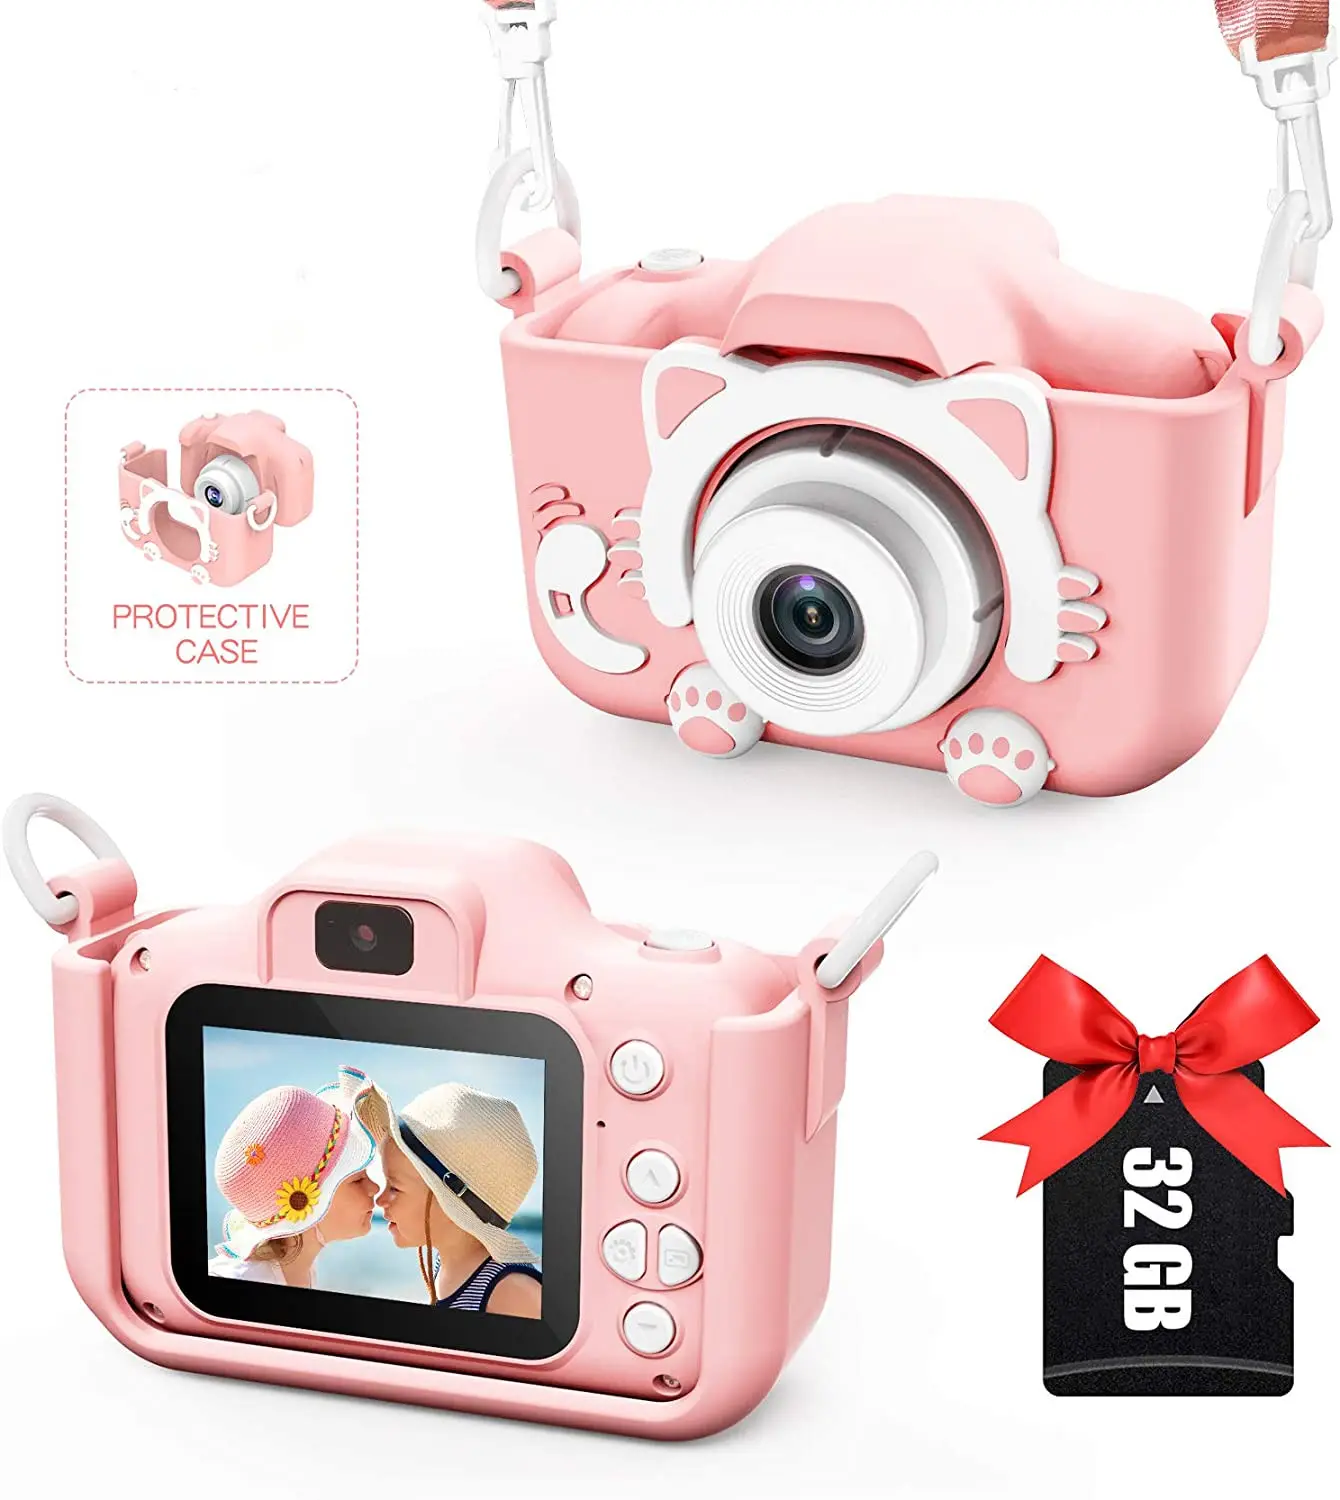 Kamera Camcorder Digital untuk Anak-anak, Mainan Lucu, Kucing, Anjing, Unicorn, Mainan Kamera Anak-anak, Selfie, Balita, Anak, 1080P HD